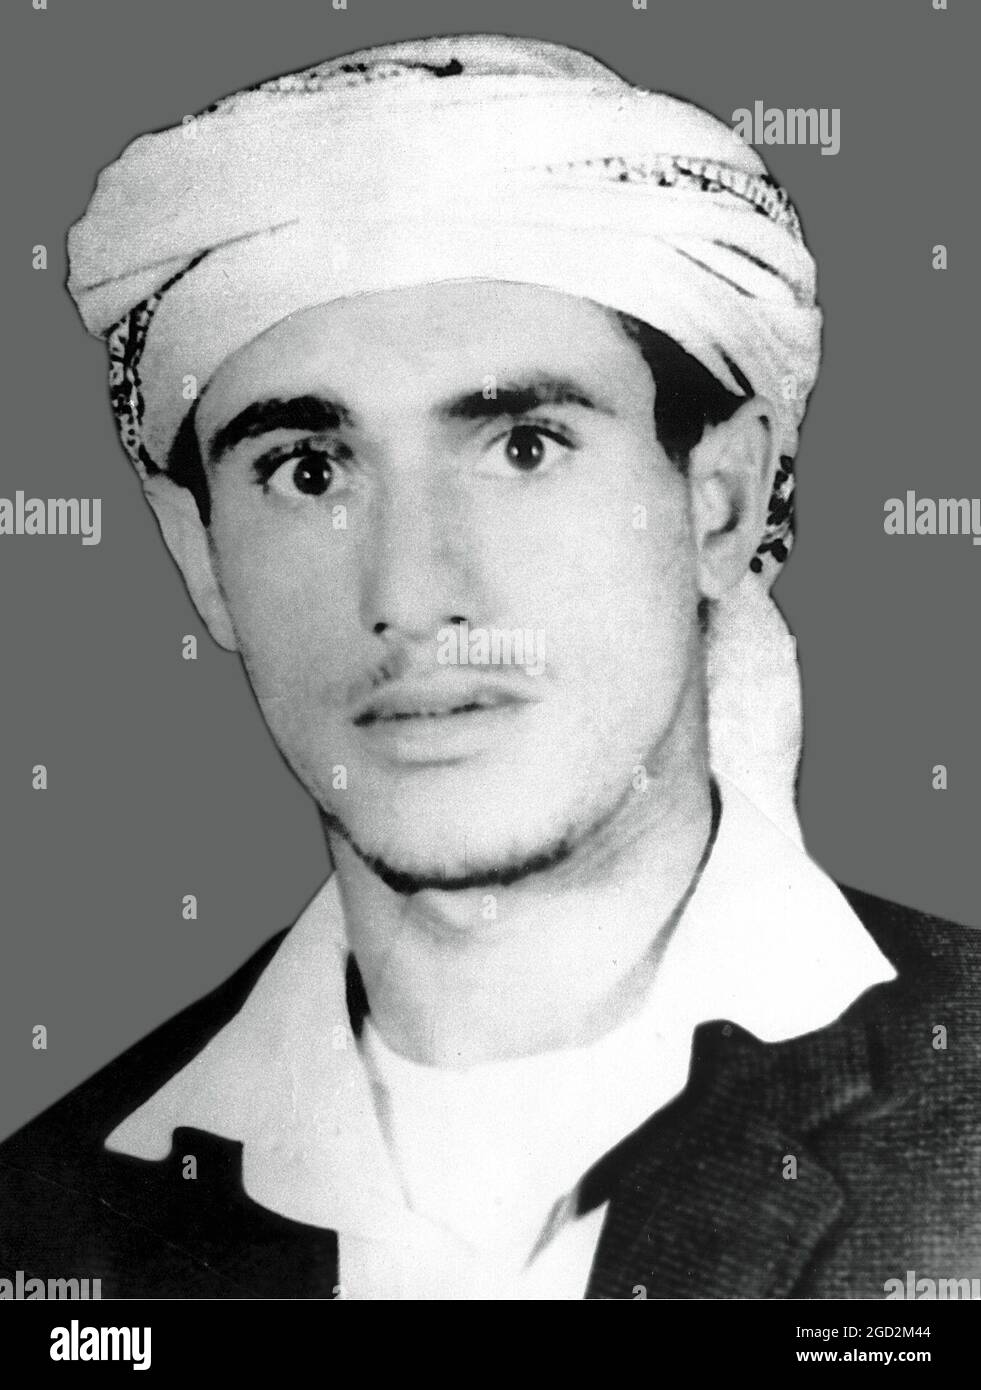 Young Ali Abdullah Saleh (unknown date) Stock Photo